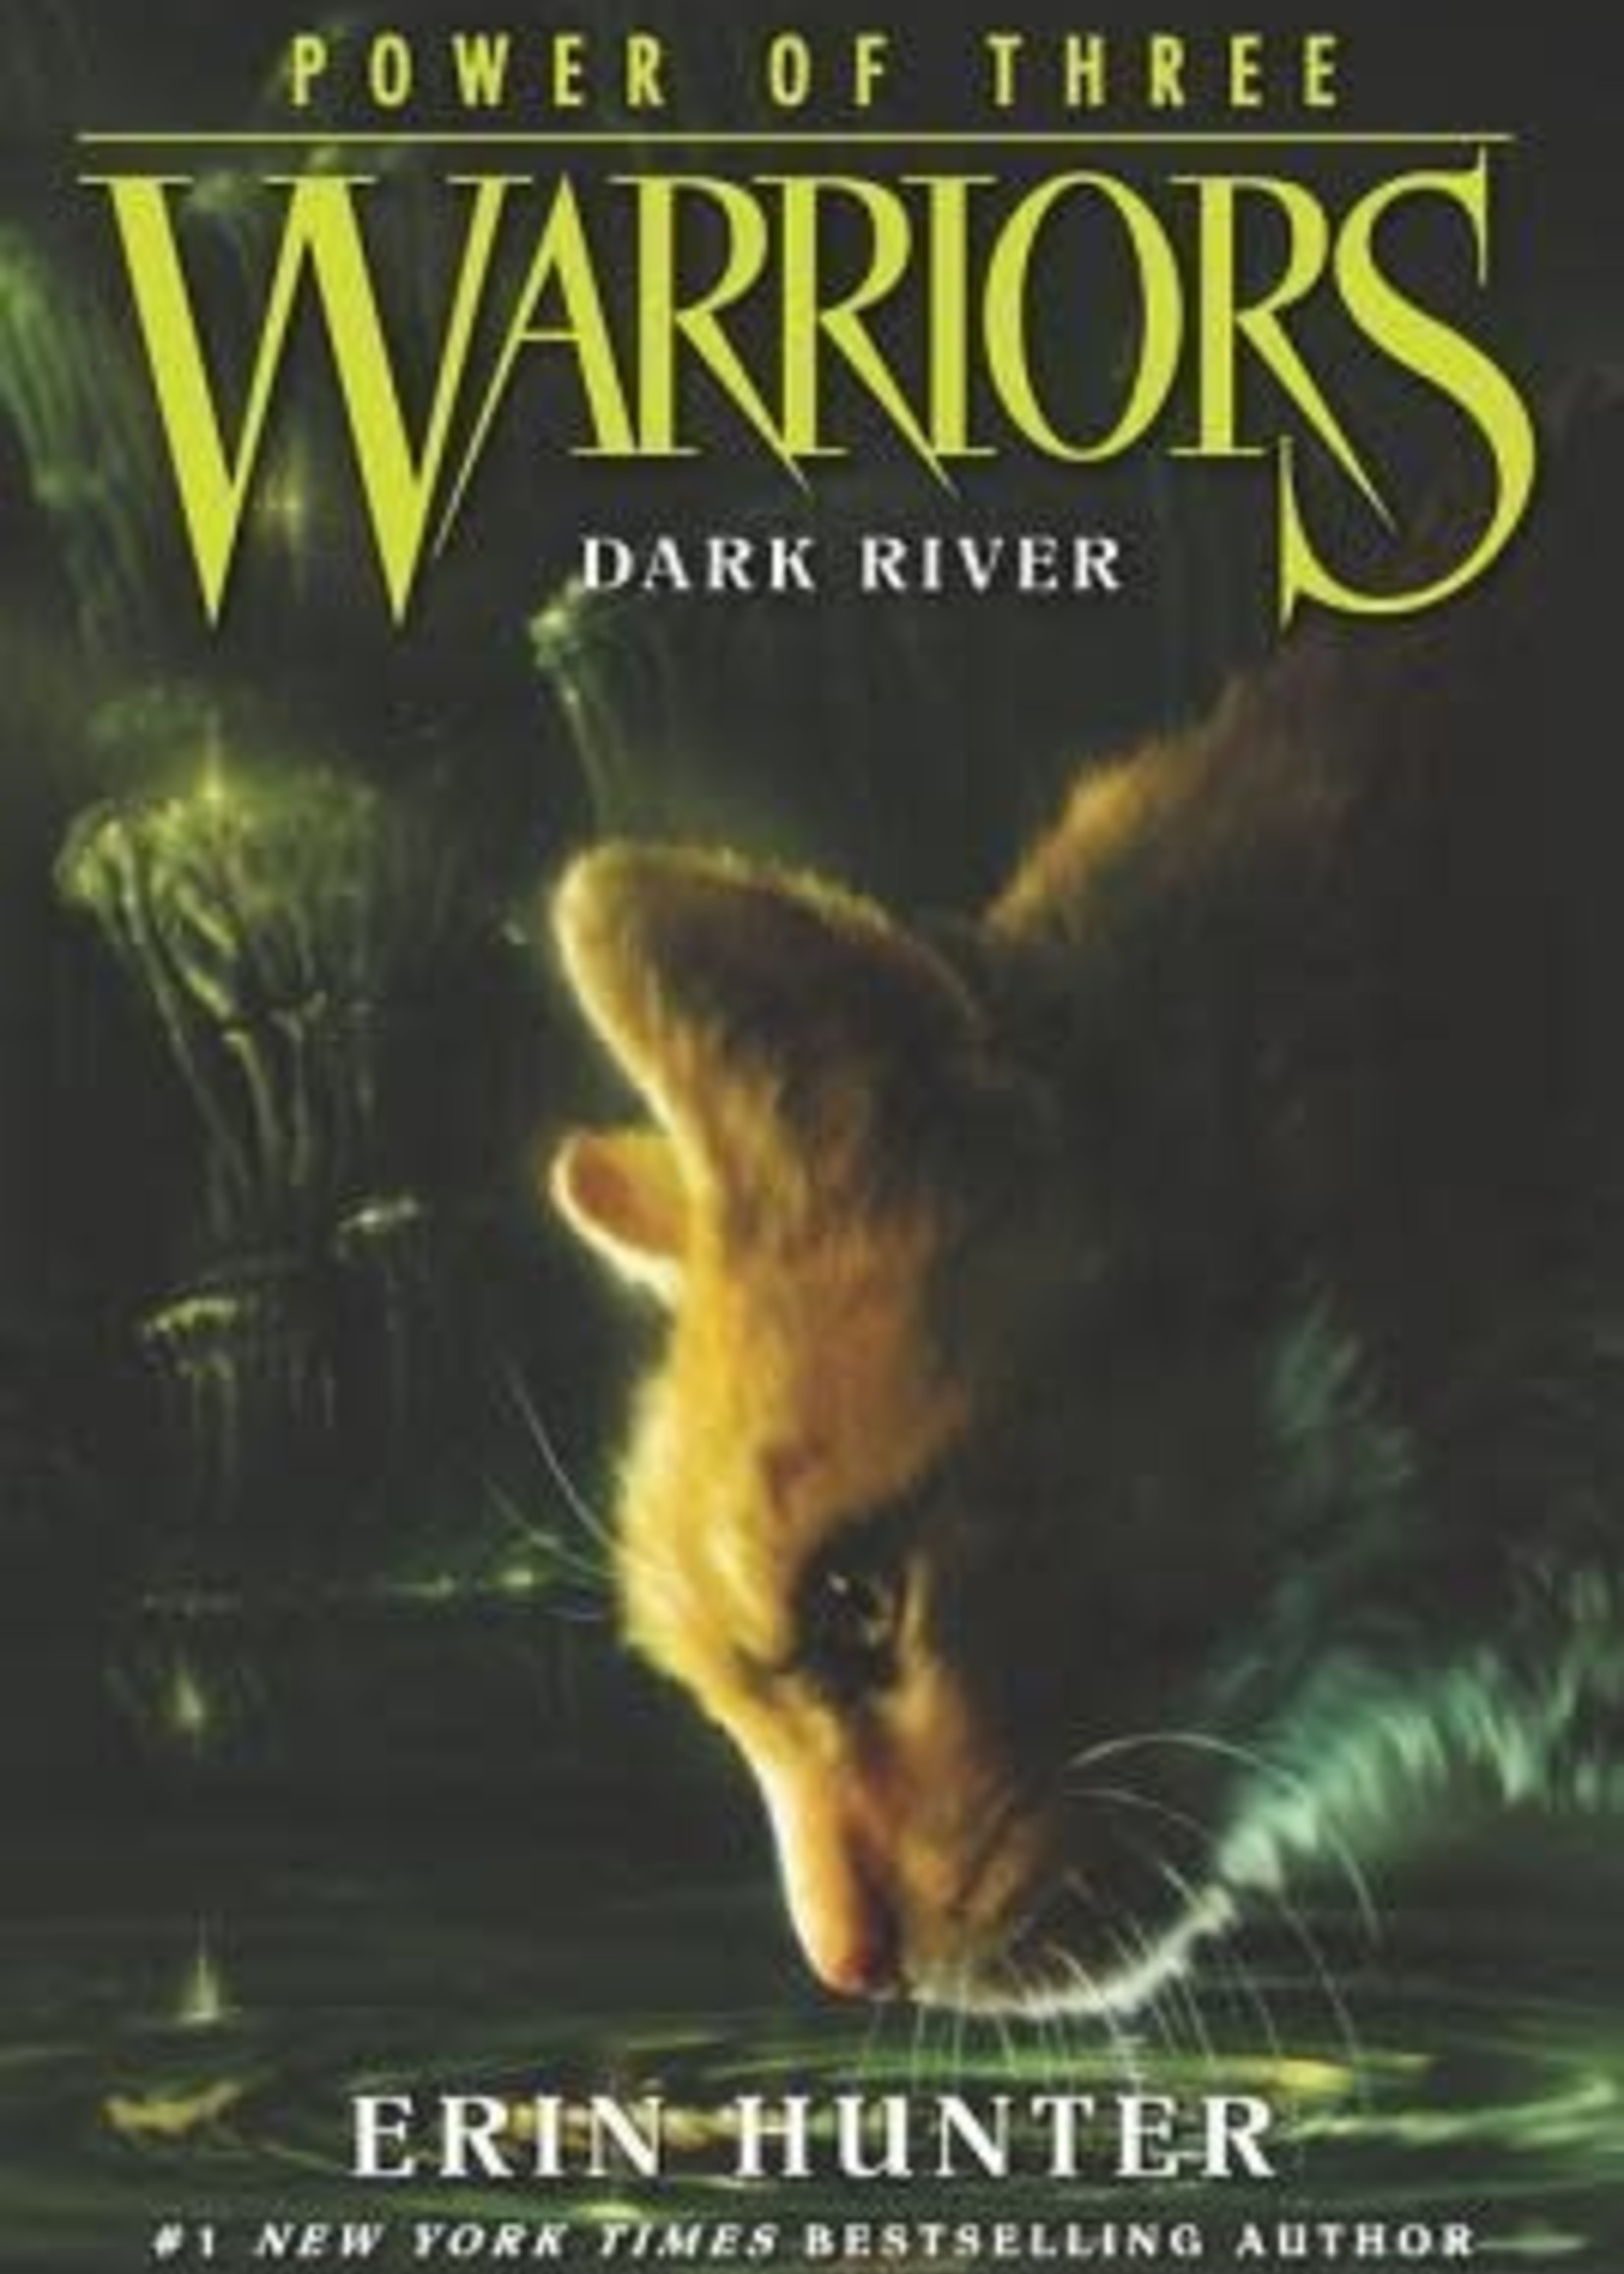 Dark River (Warriors: Power of Three #2) by Erin Hunter